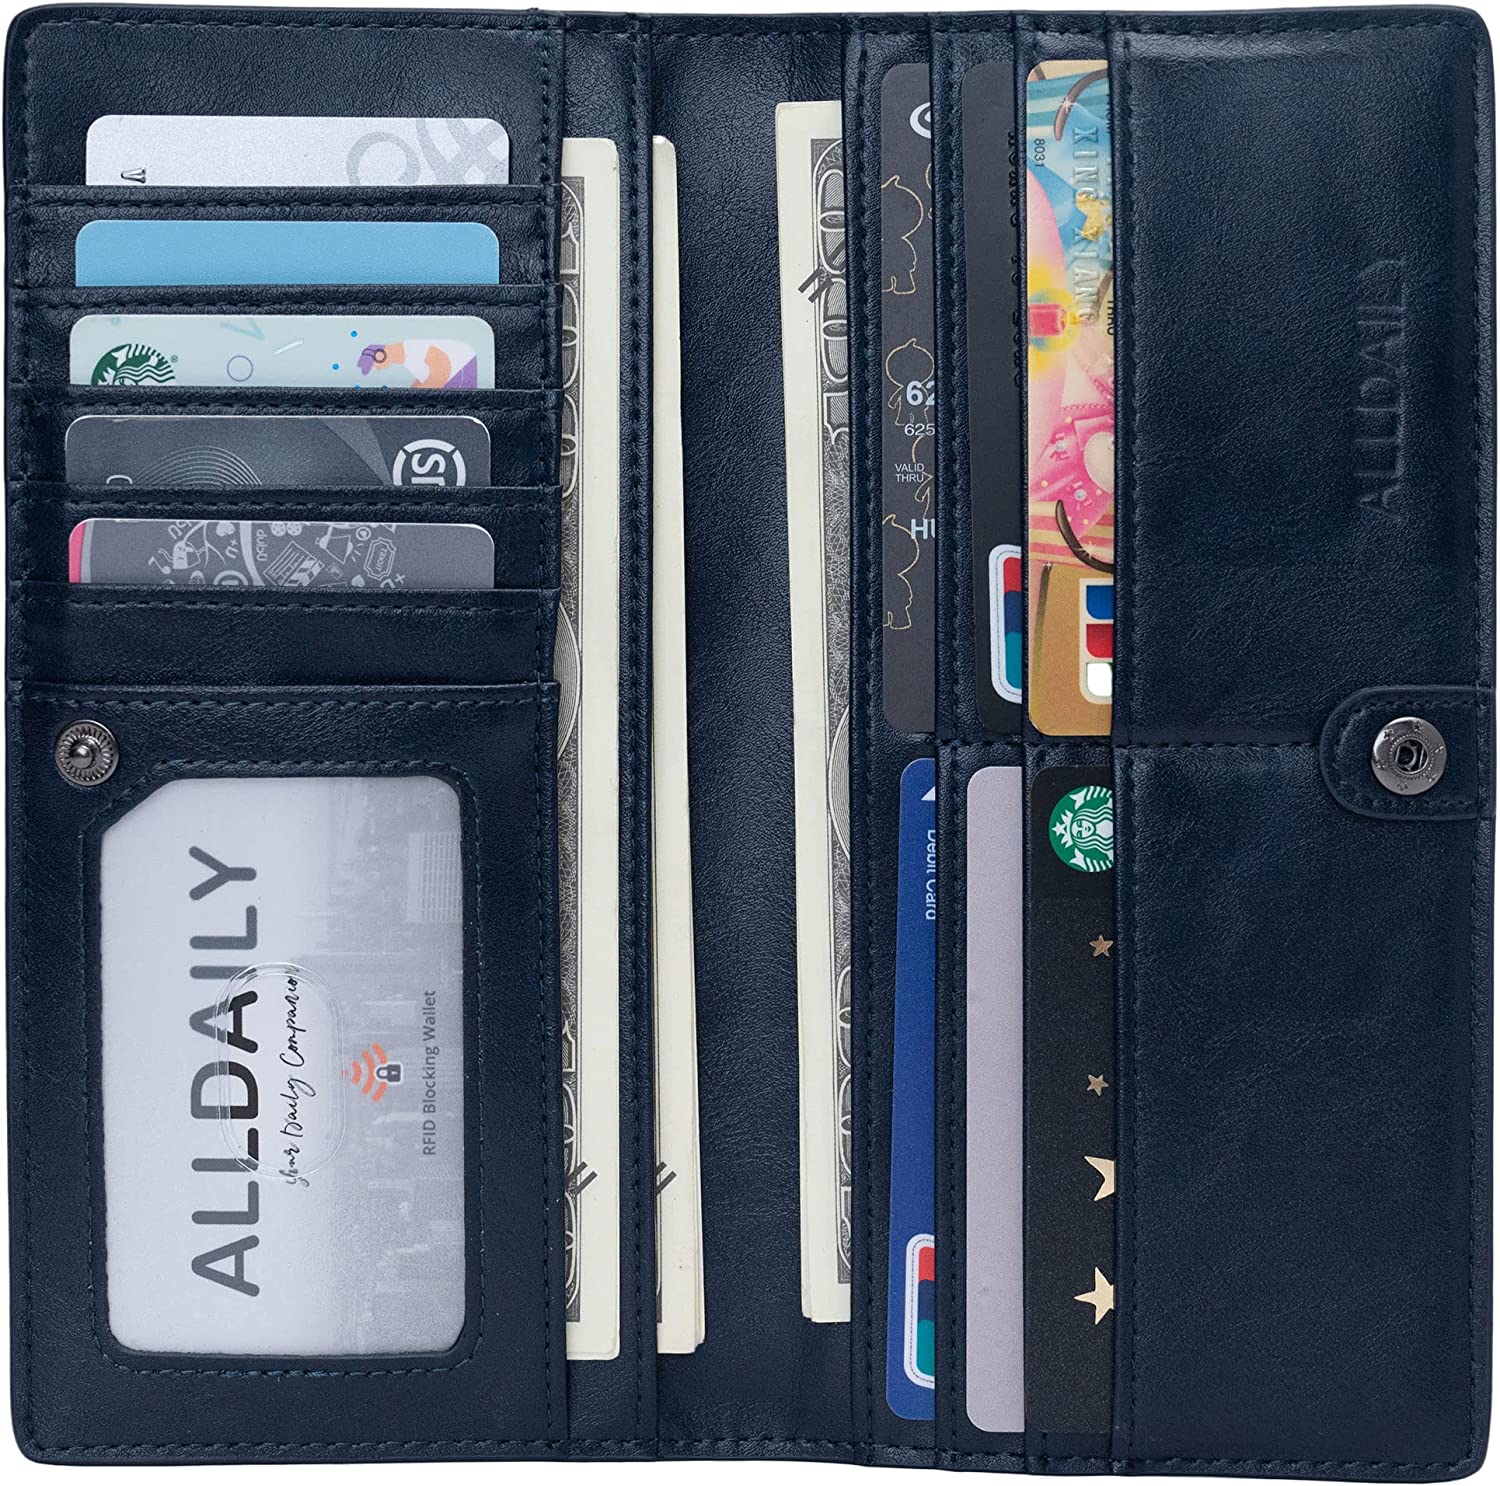 Alldaily ultra slim RFID blocking wallet